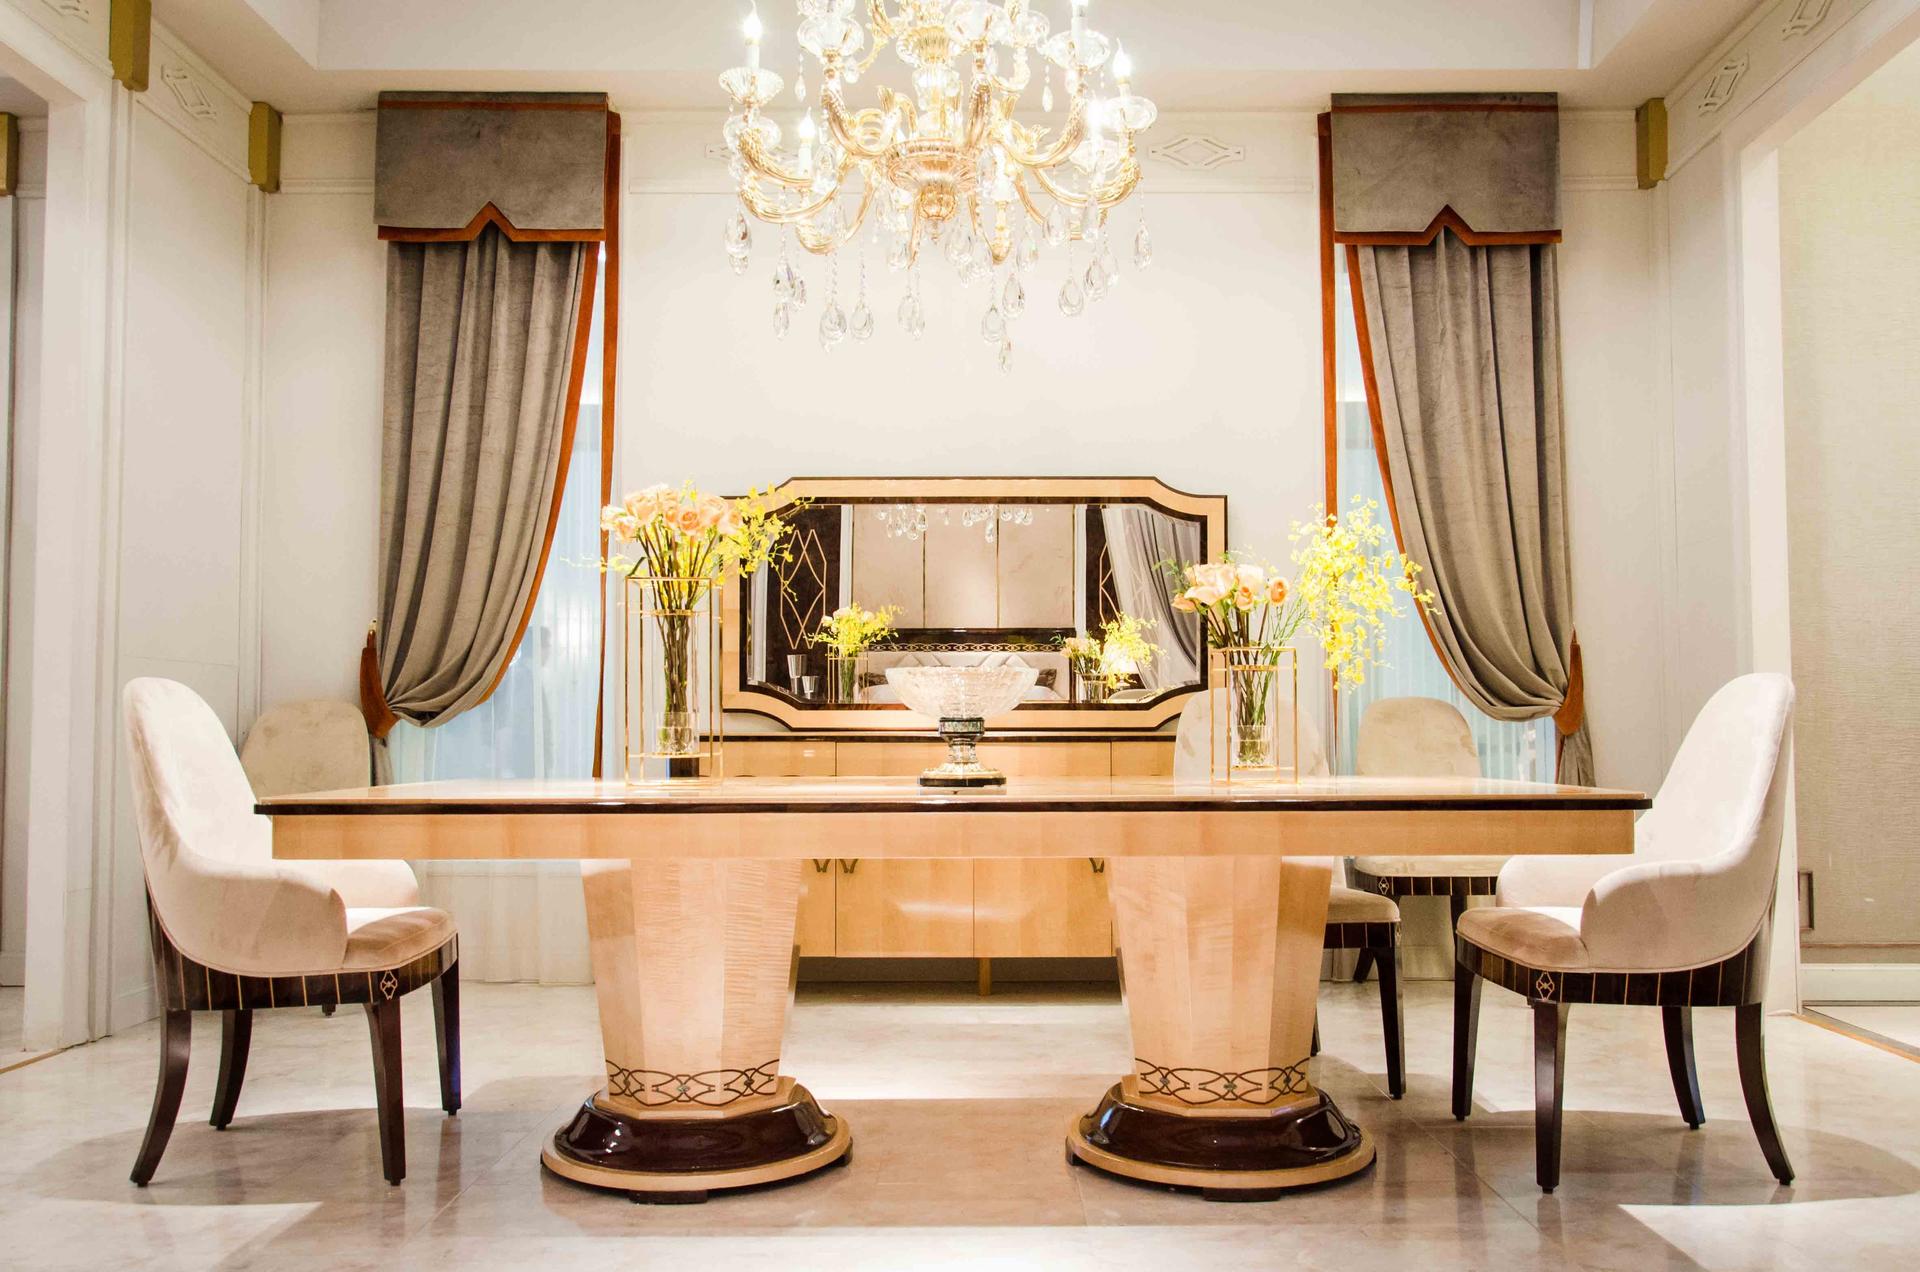 wood design classic dining room furniture antique senbetter Senbetter company